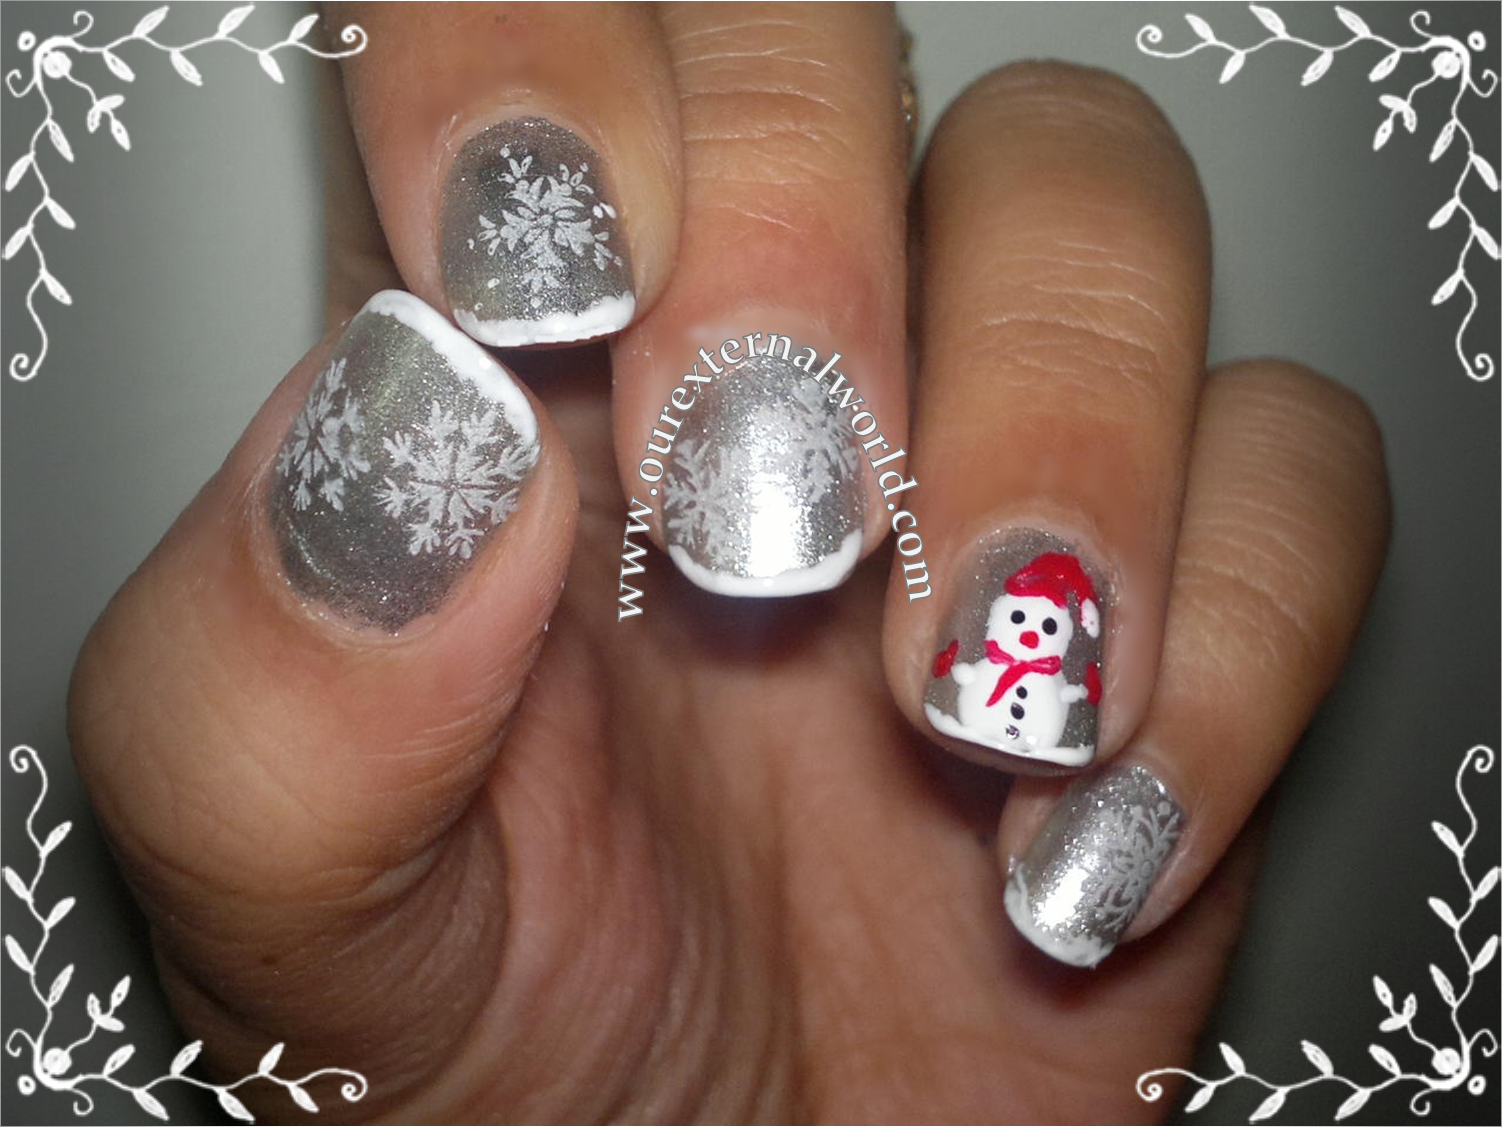 8. "Glittery Snowman Holiday Nail Art Design" - wide 5